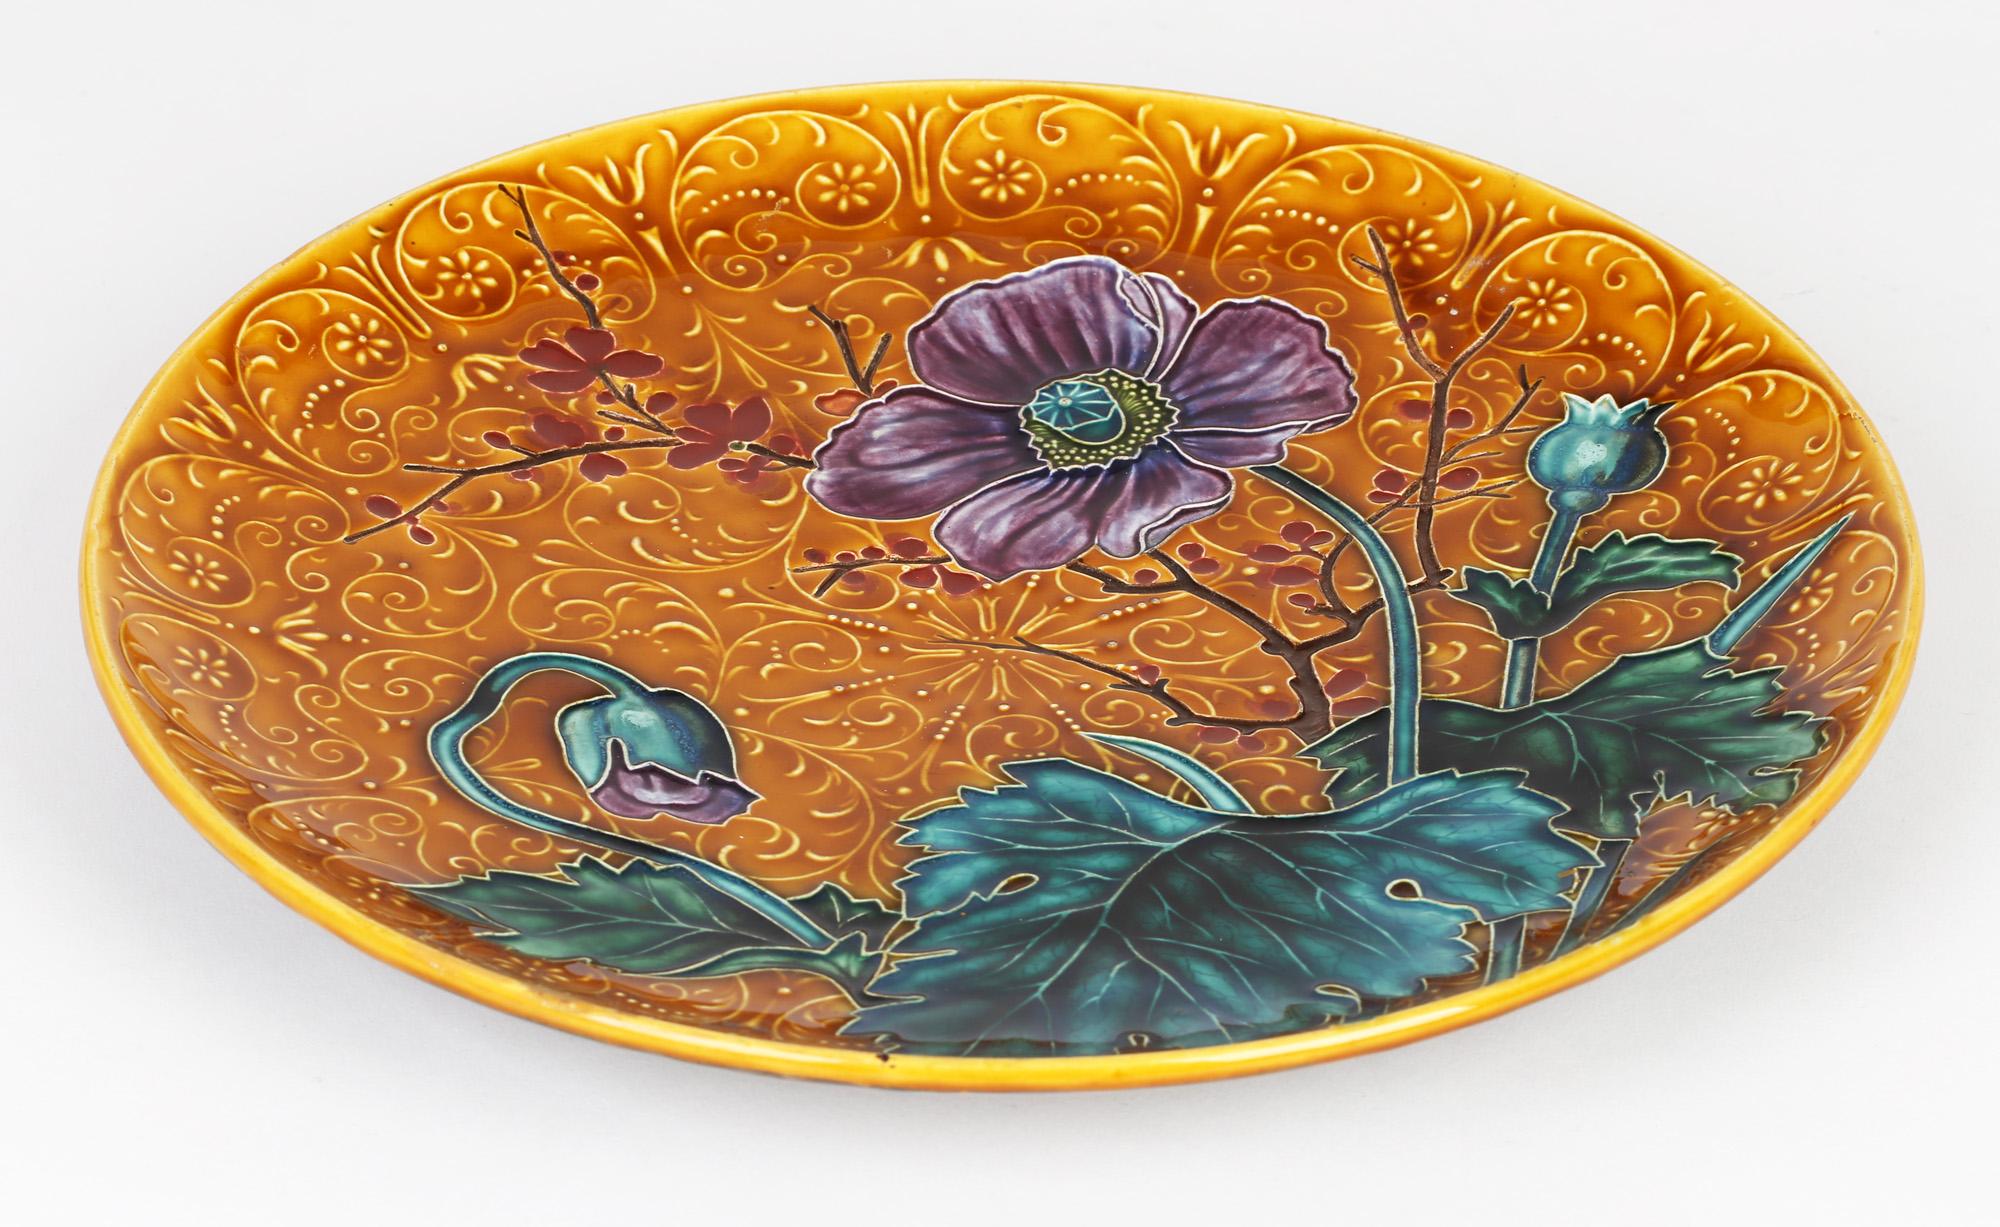 Austrian Art Nouveau Pottery Wall Plaque with Tubelined Floral Designs For Sale 8